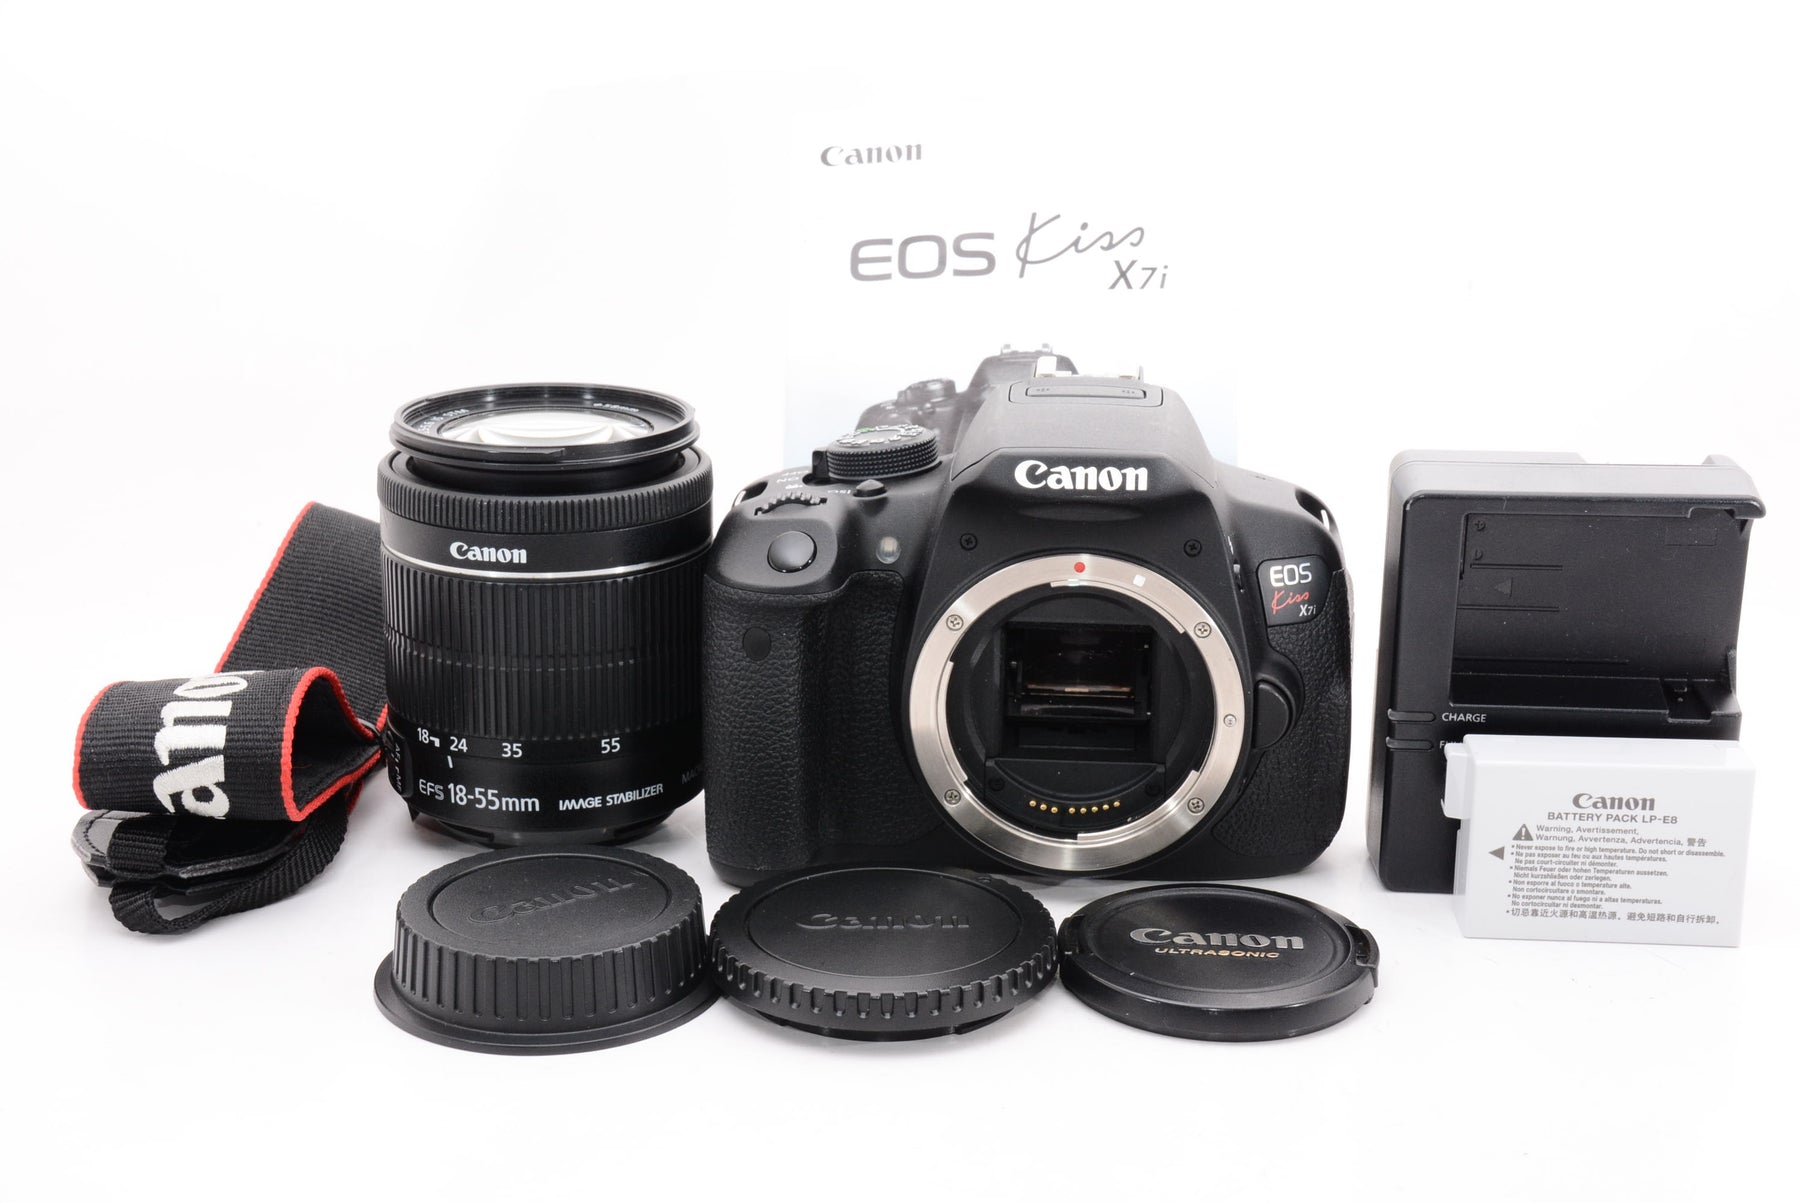 Canon デジタル一眼レフカメラ EOS Kiss X7i レンズキット EF-S18-55mm F3.5-5.6 IS STM付属 KISSX7I - 4